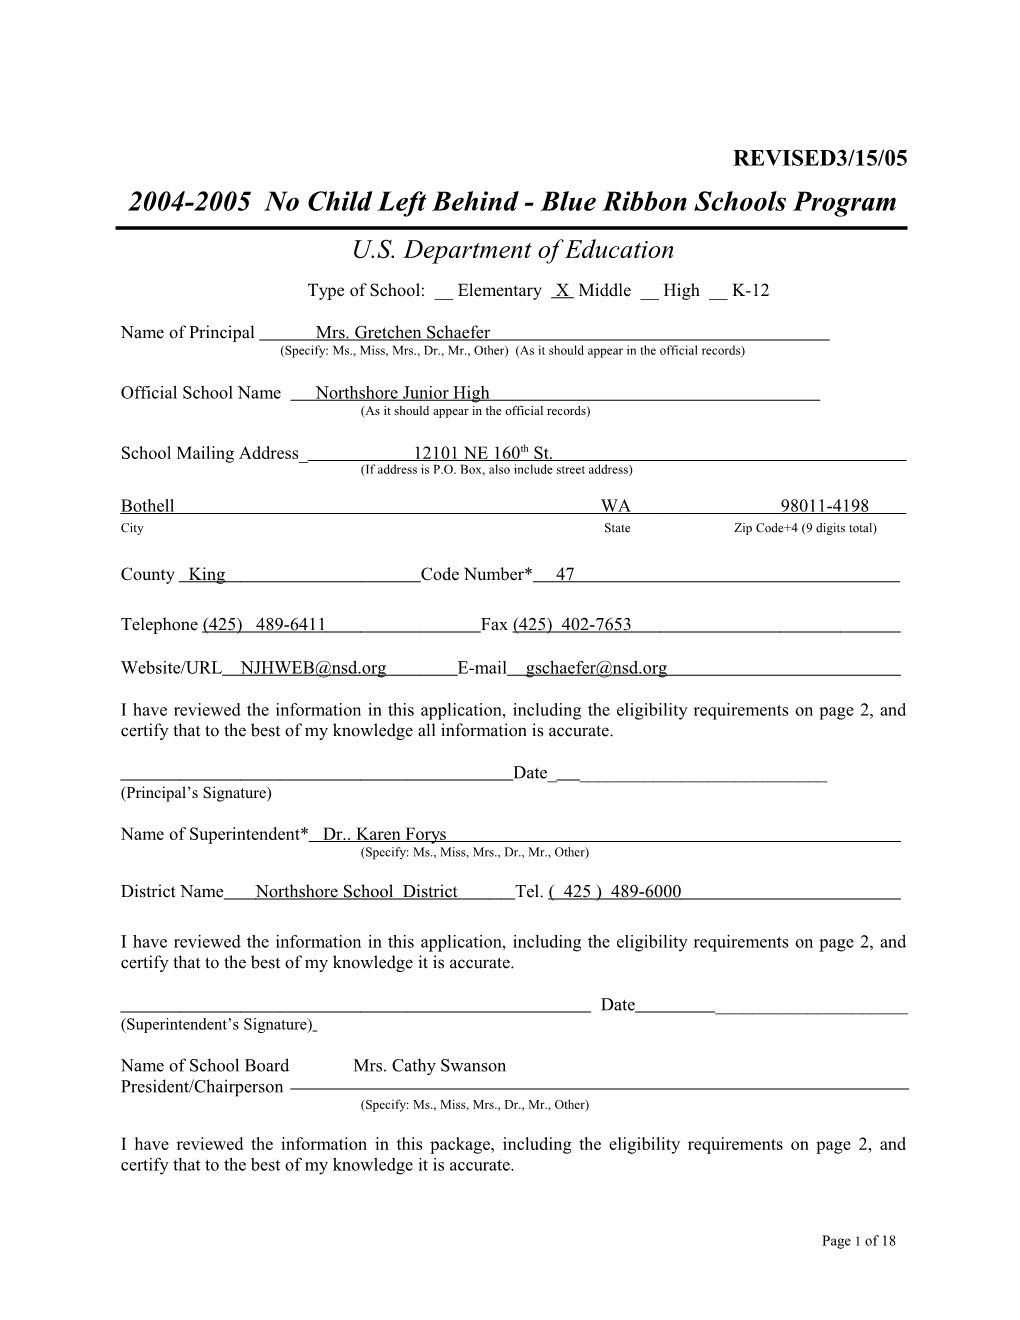 Northshore Junior High School Application: 2004-2005, No Child Left Behind - Blue Ribbon